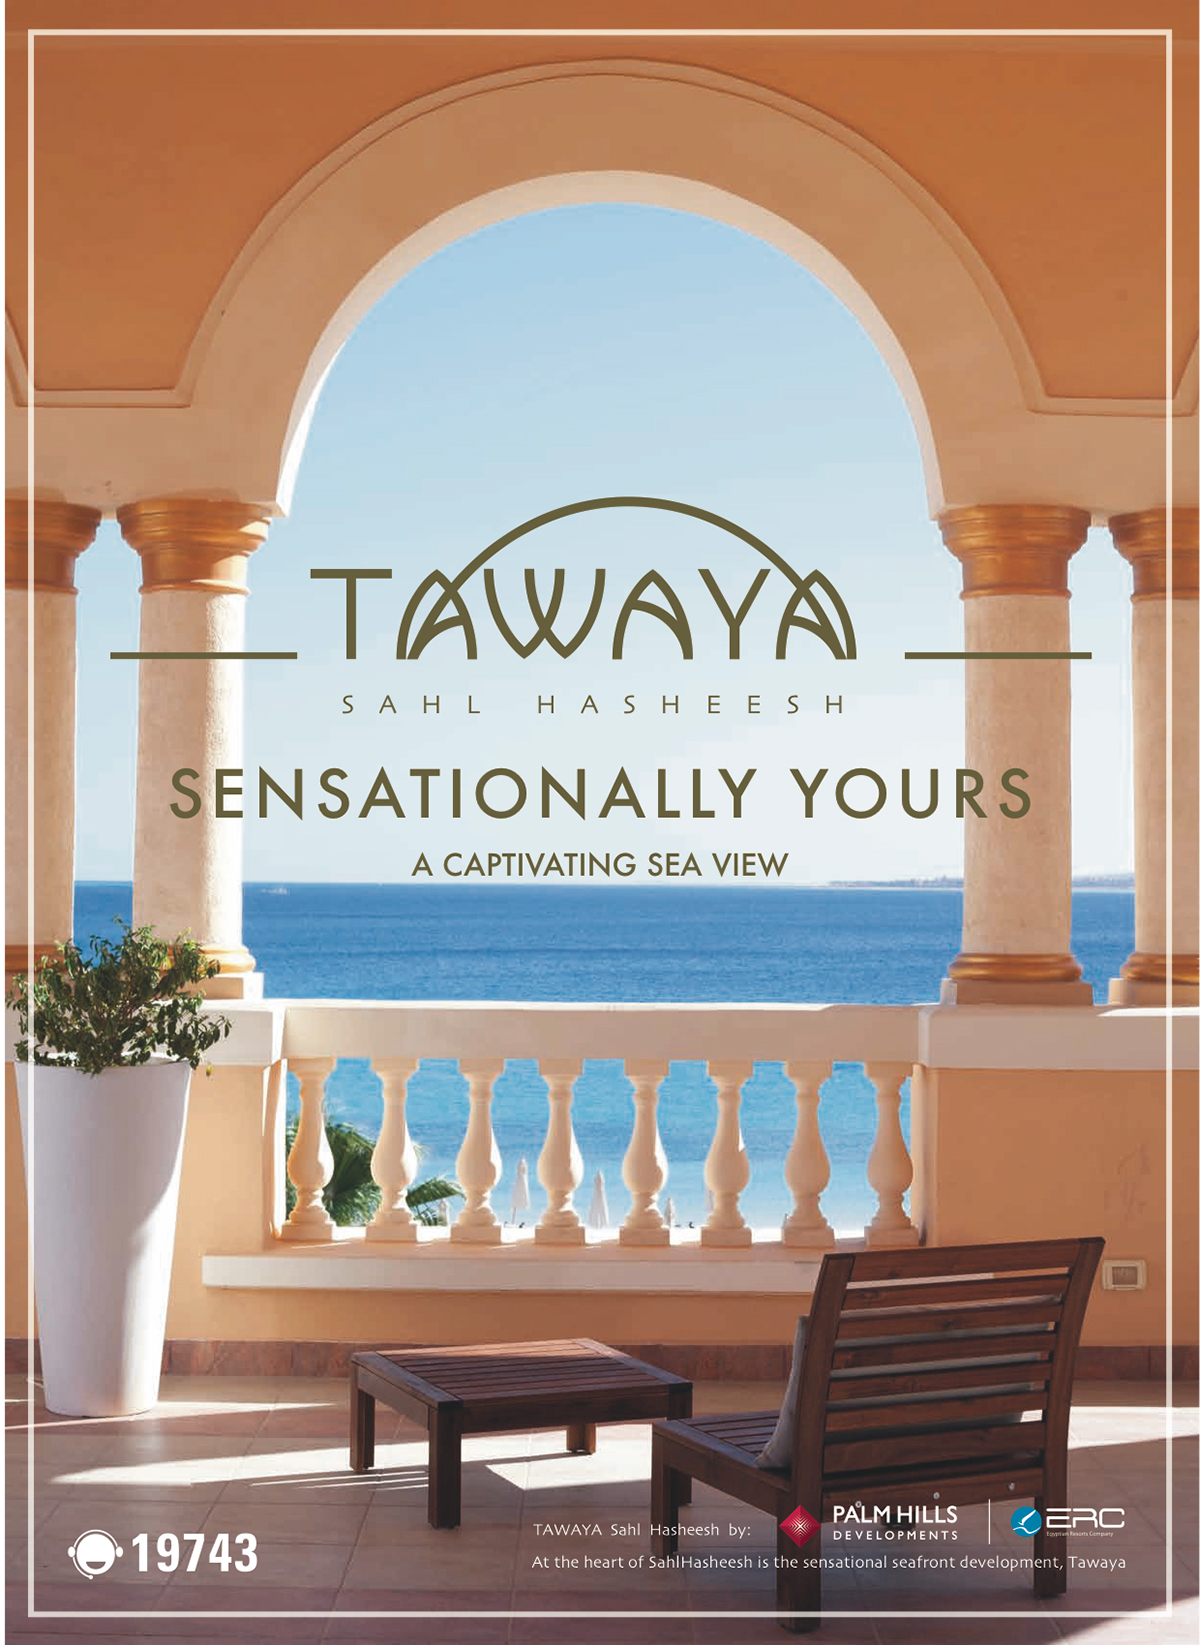 Tawaya hurghada FP7 egypt Travel campaign tourism Hospitality palmhills